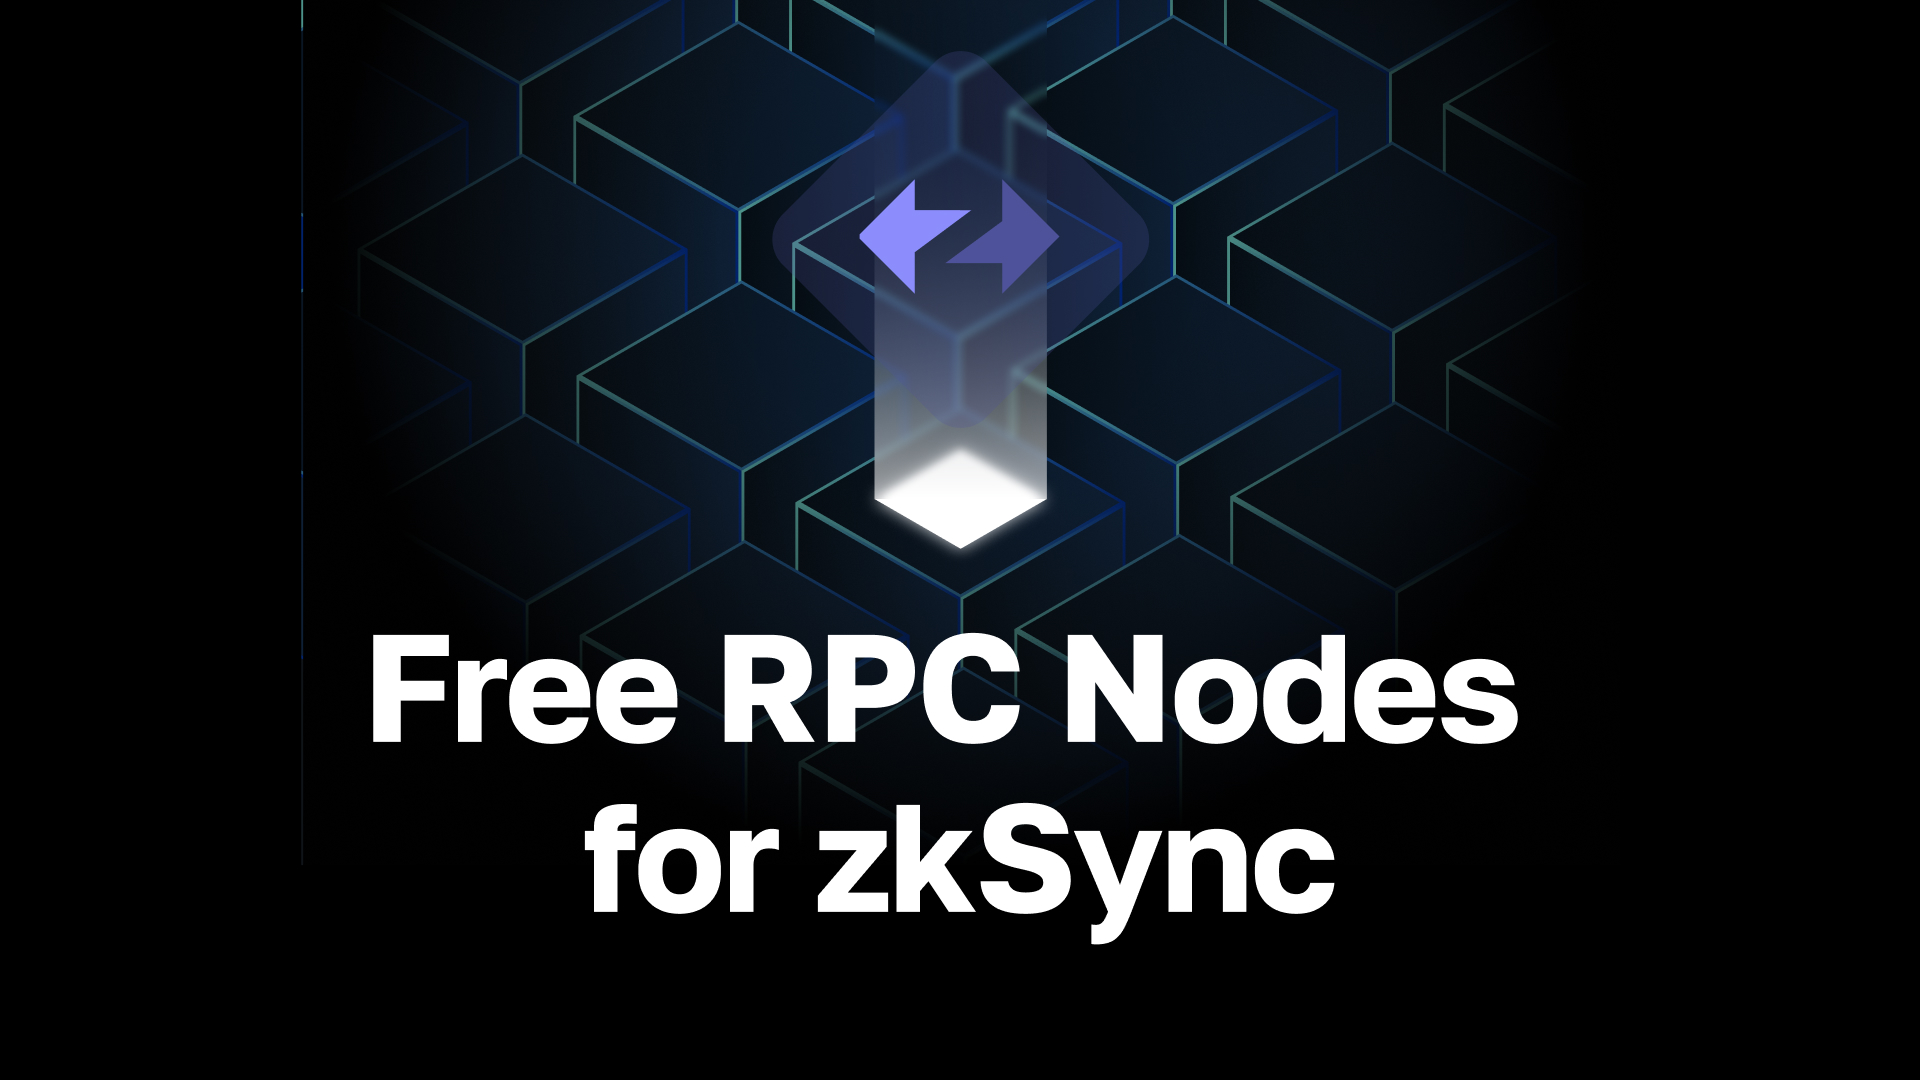 zkSync Era logo with text: "Free RPC Nodes for zkSync"